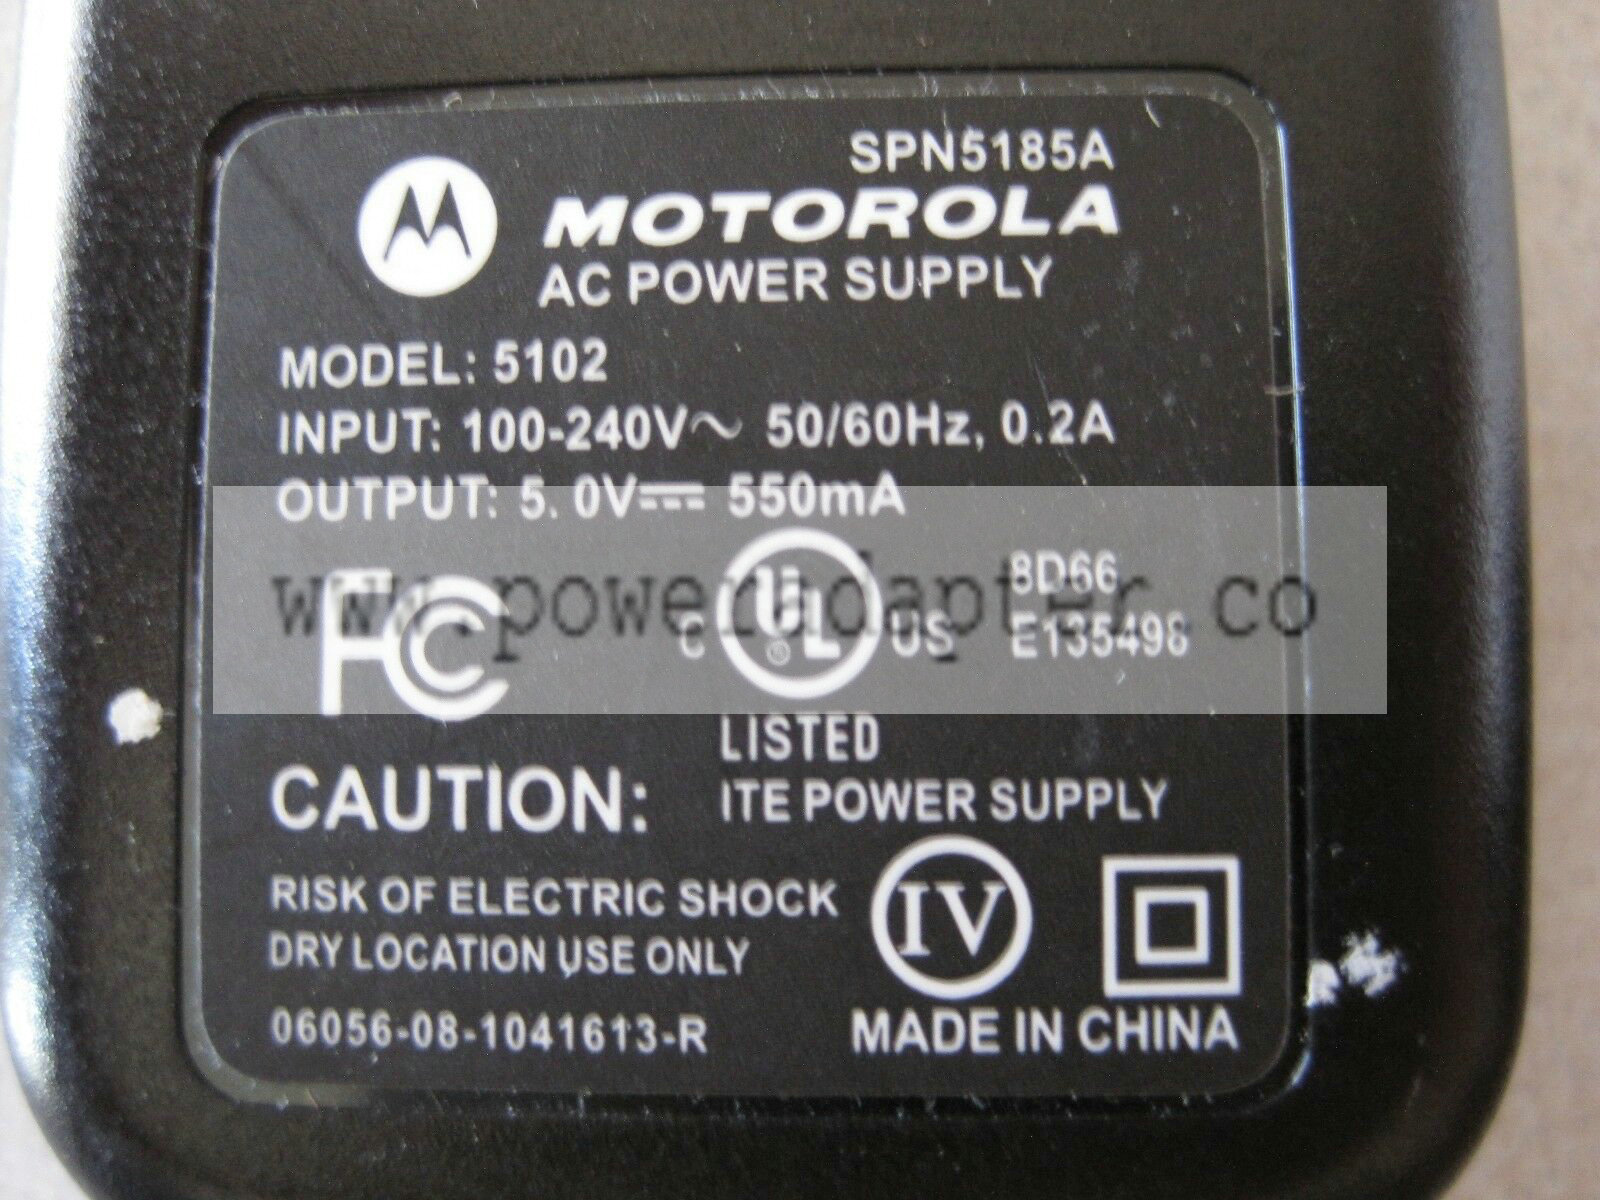 Motorola Adapter Model: 5102, 5V, 550mA Motorola Adapter Model: 5102 Output: 5V, 550mA like new condition